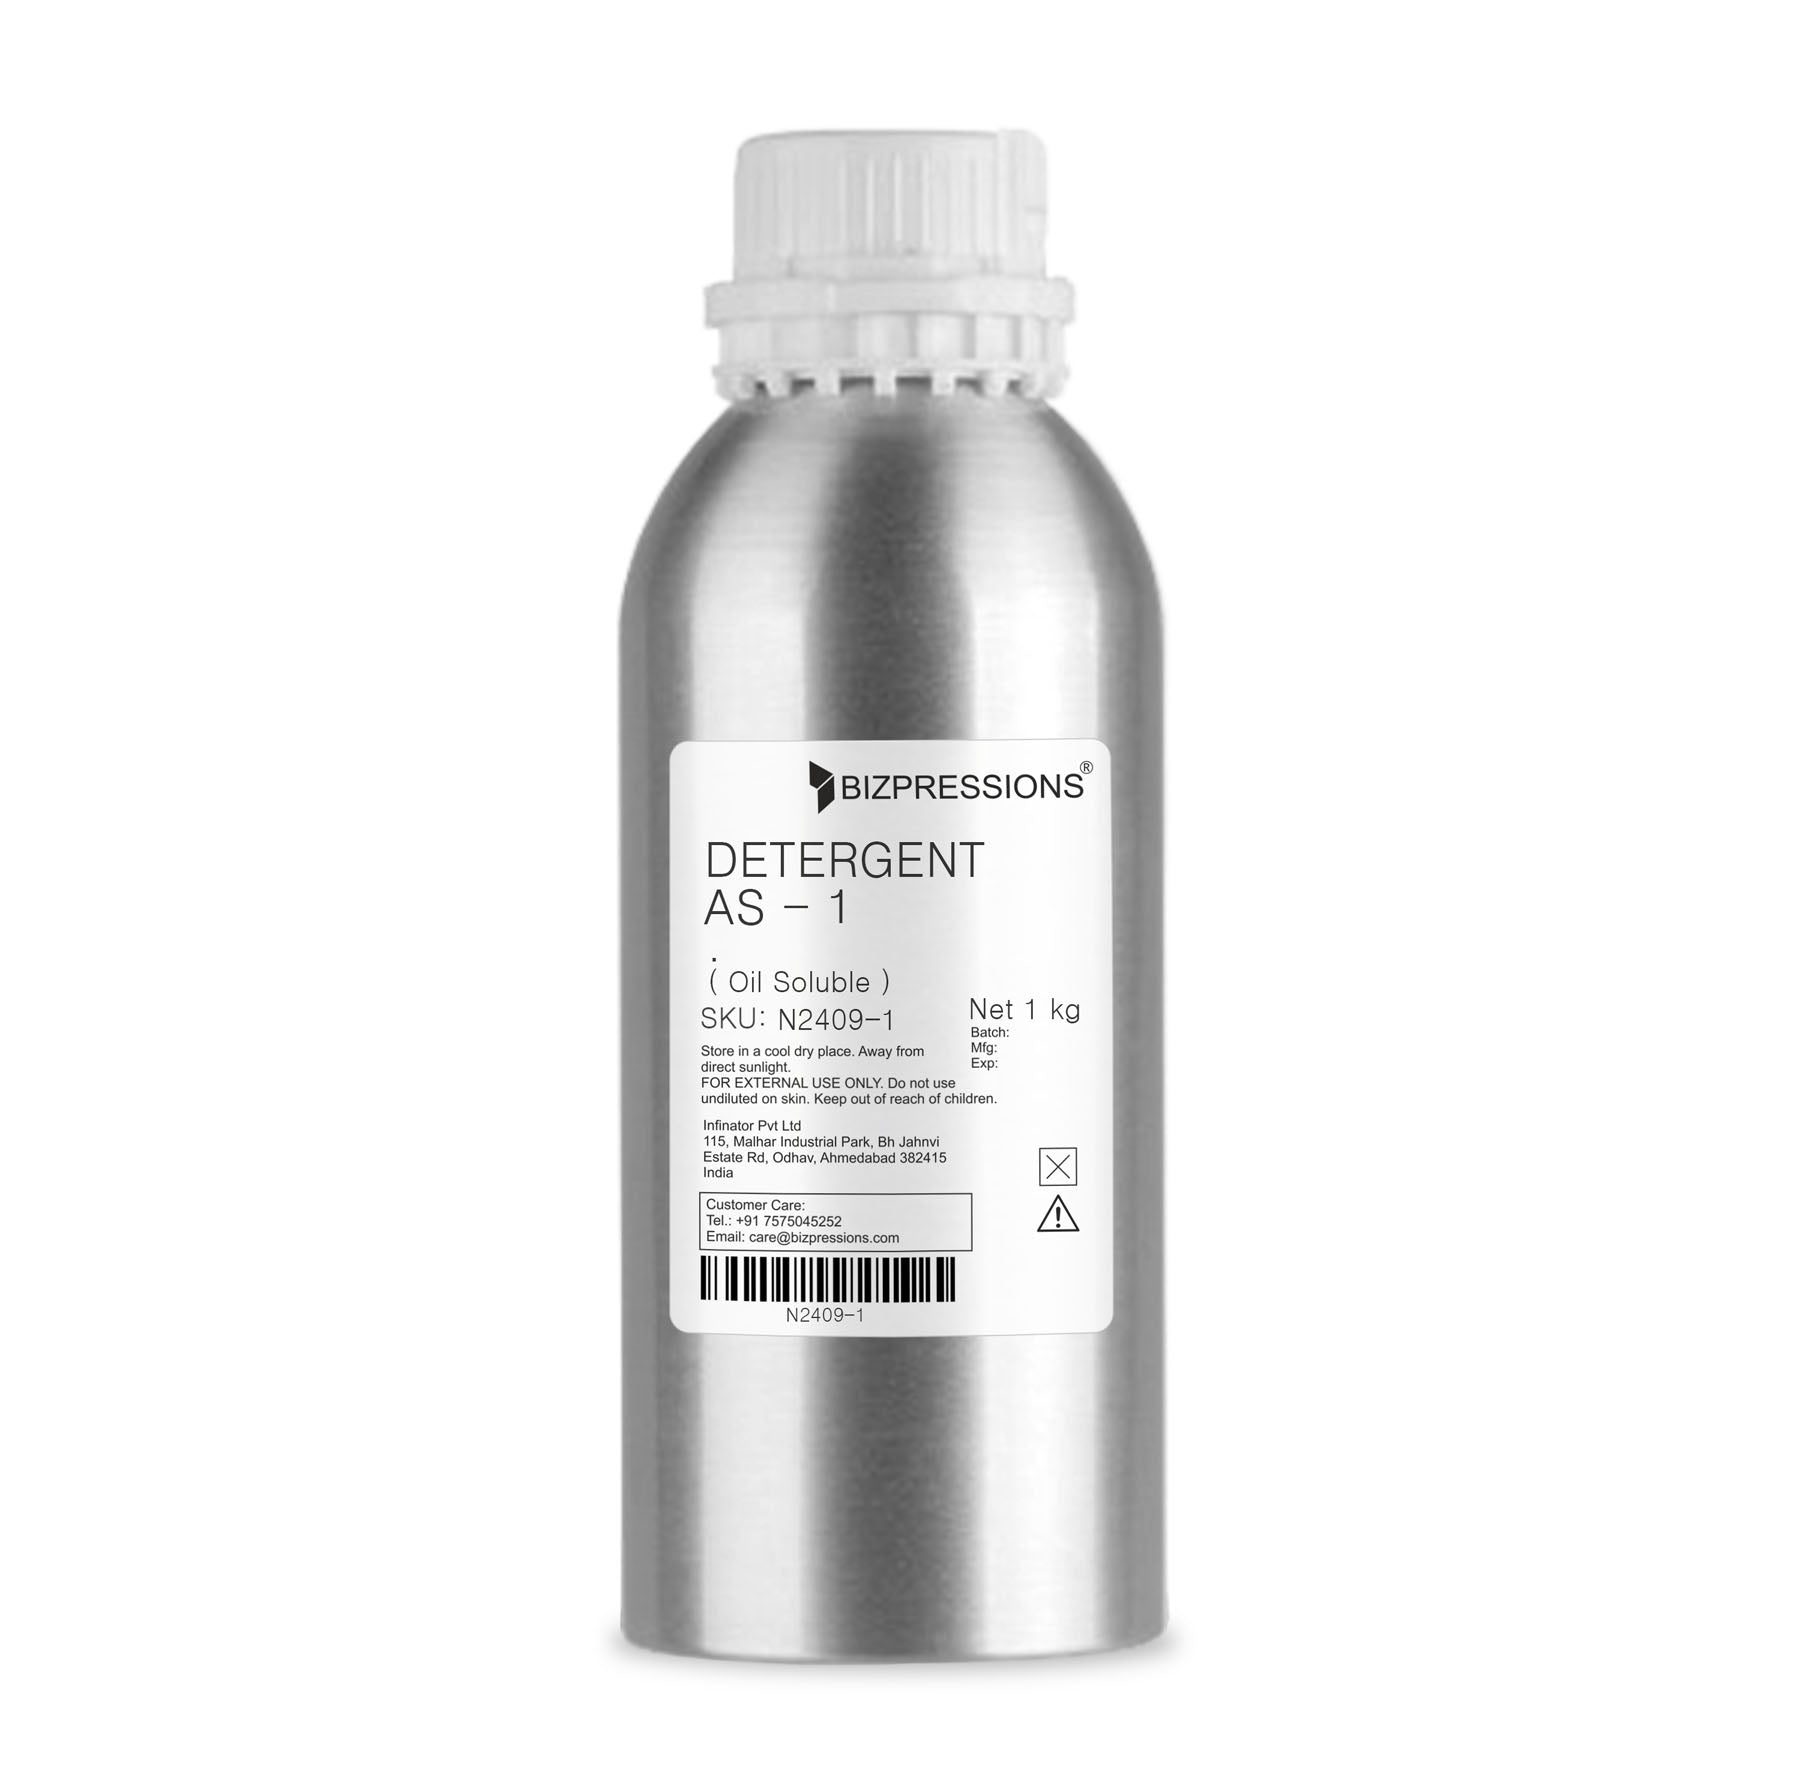 DETERGENT AS - 1 - Fragrance ( Oil Soluble ) - 1 kg